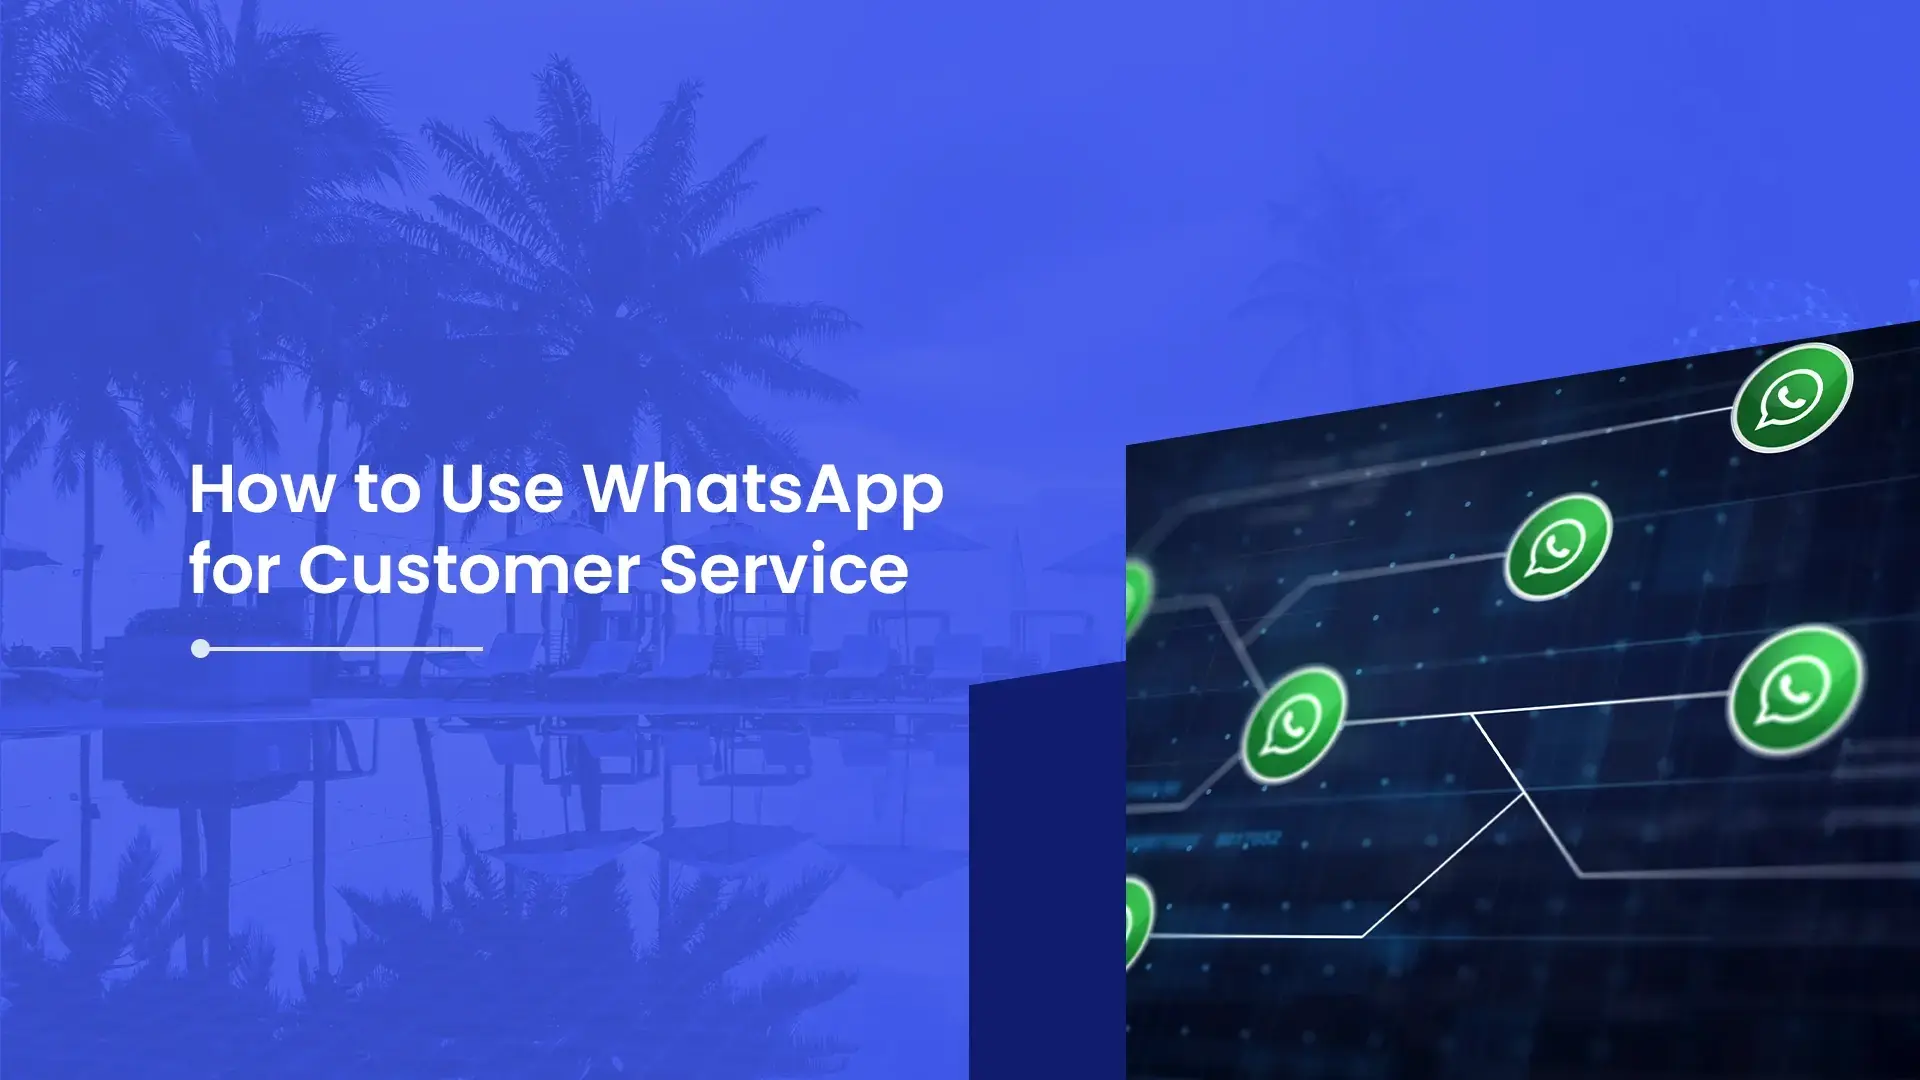 WhatsApp for Customer Service